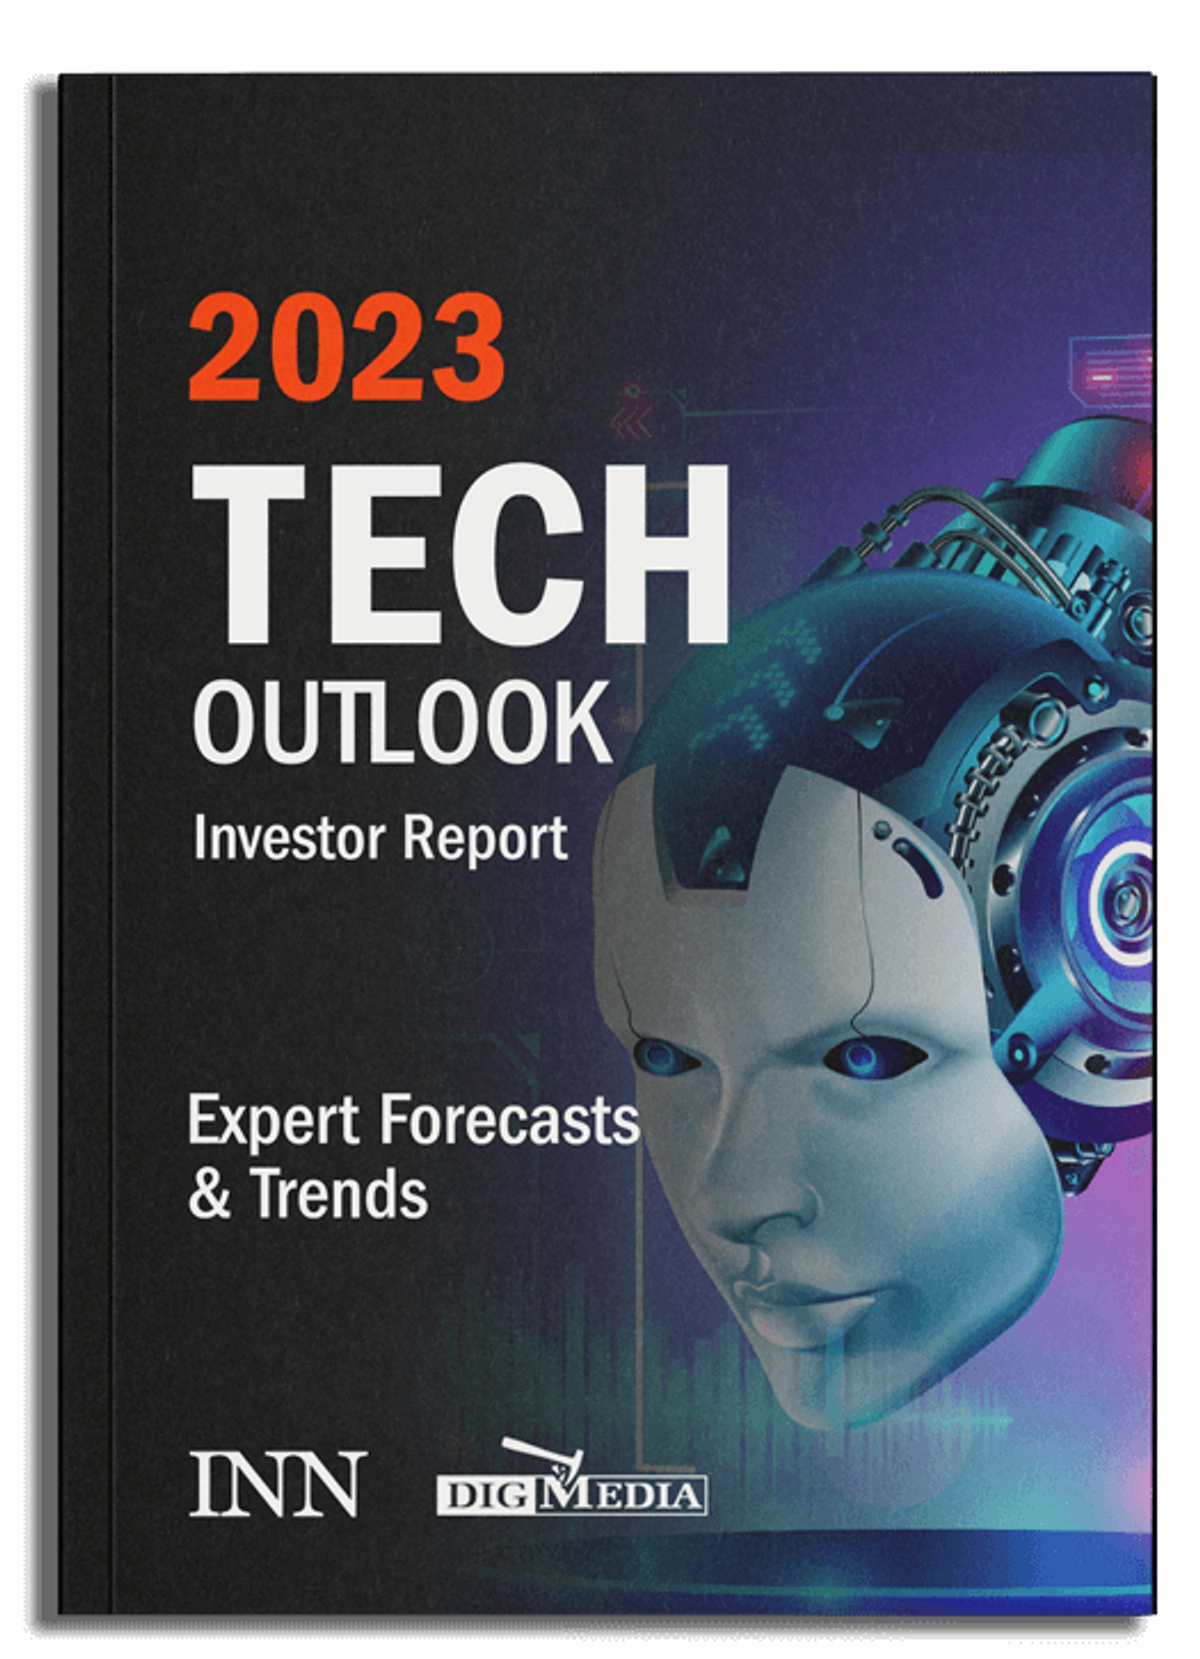 NEW! 2023 Tech Outlook Report